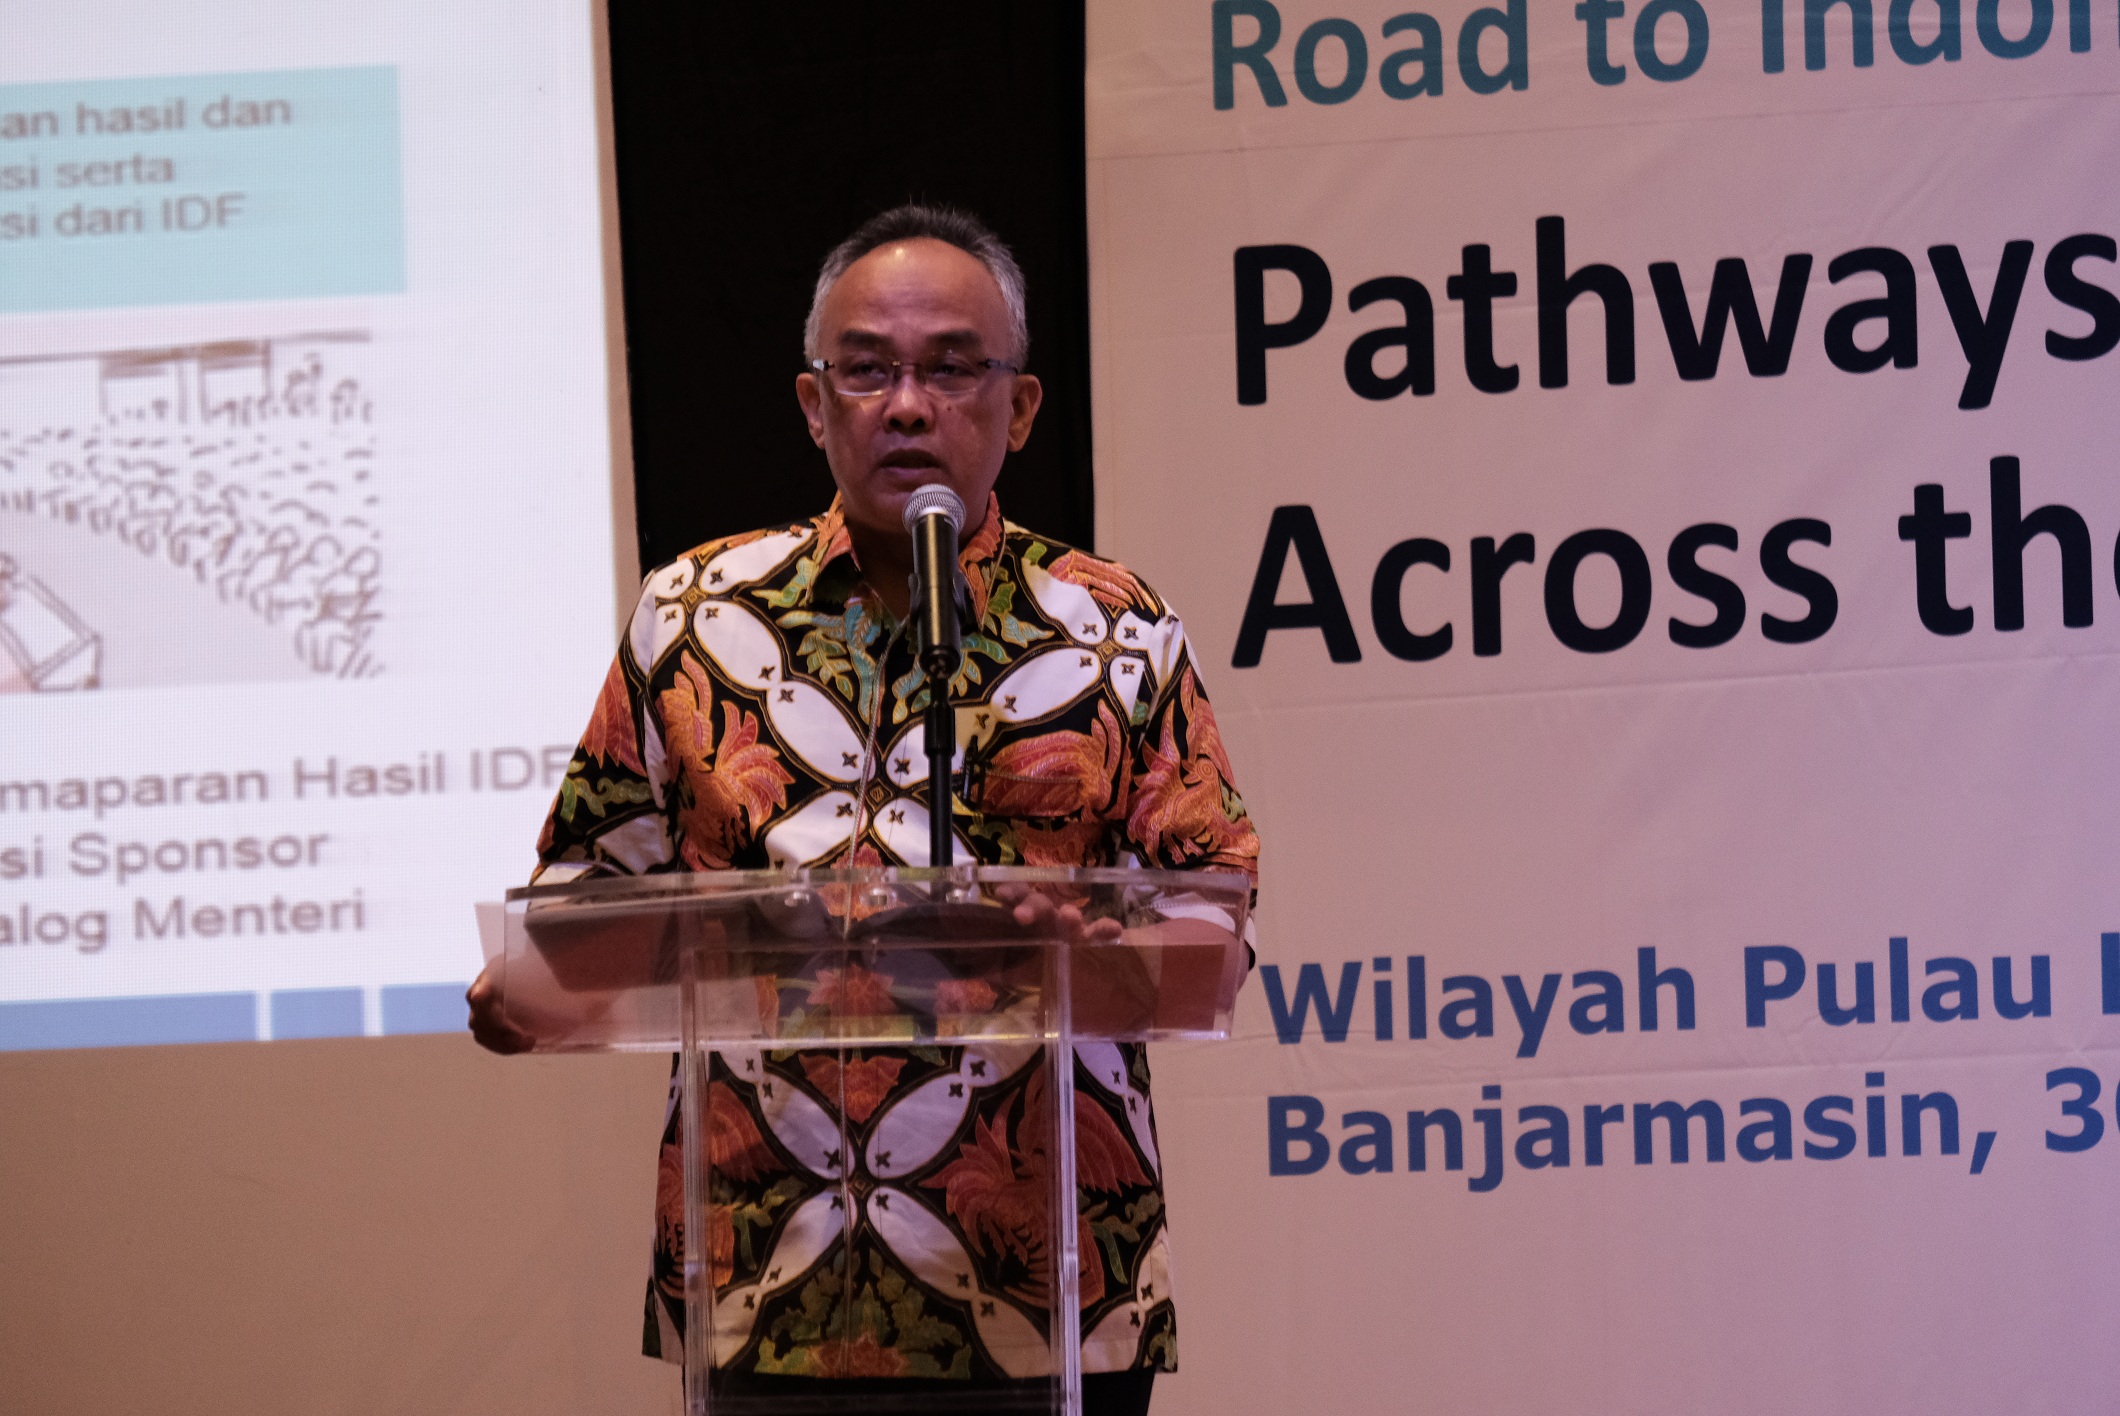 Road to Indonesia Development Forum 2018 di Banjarmasin